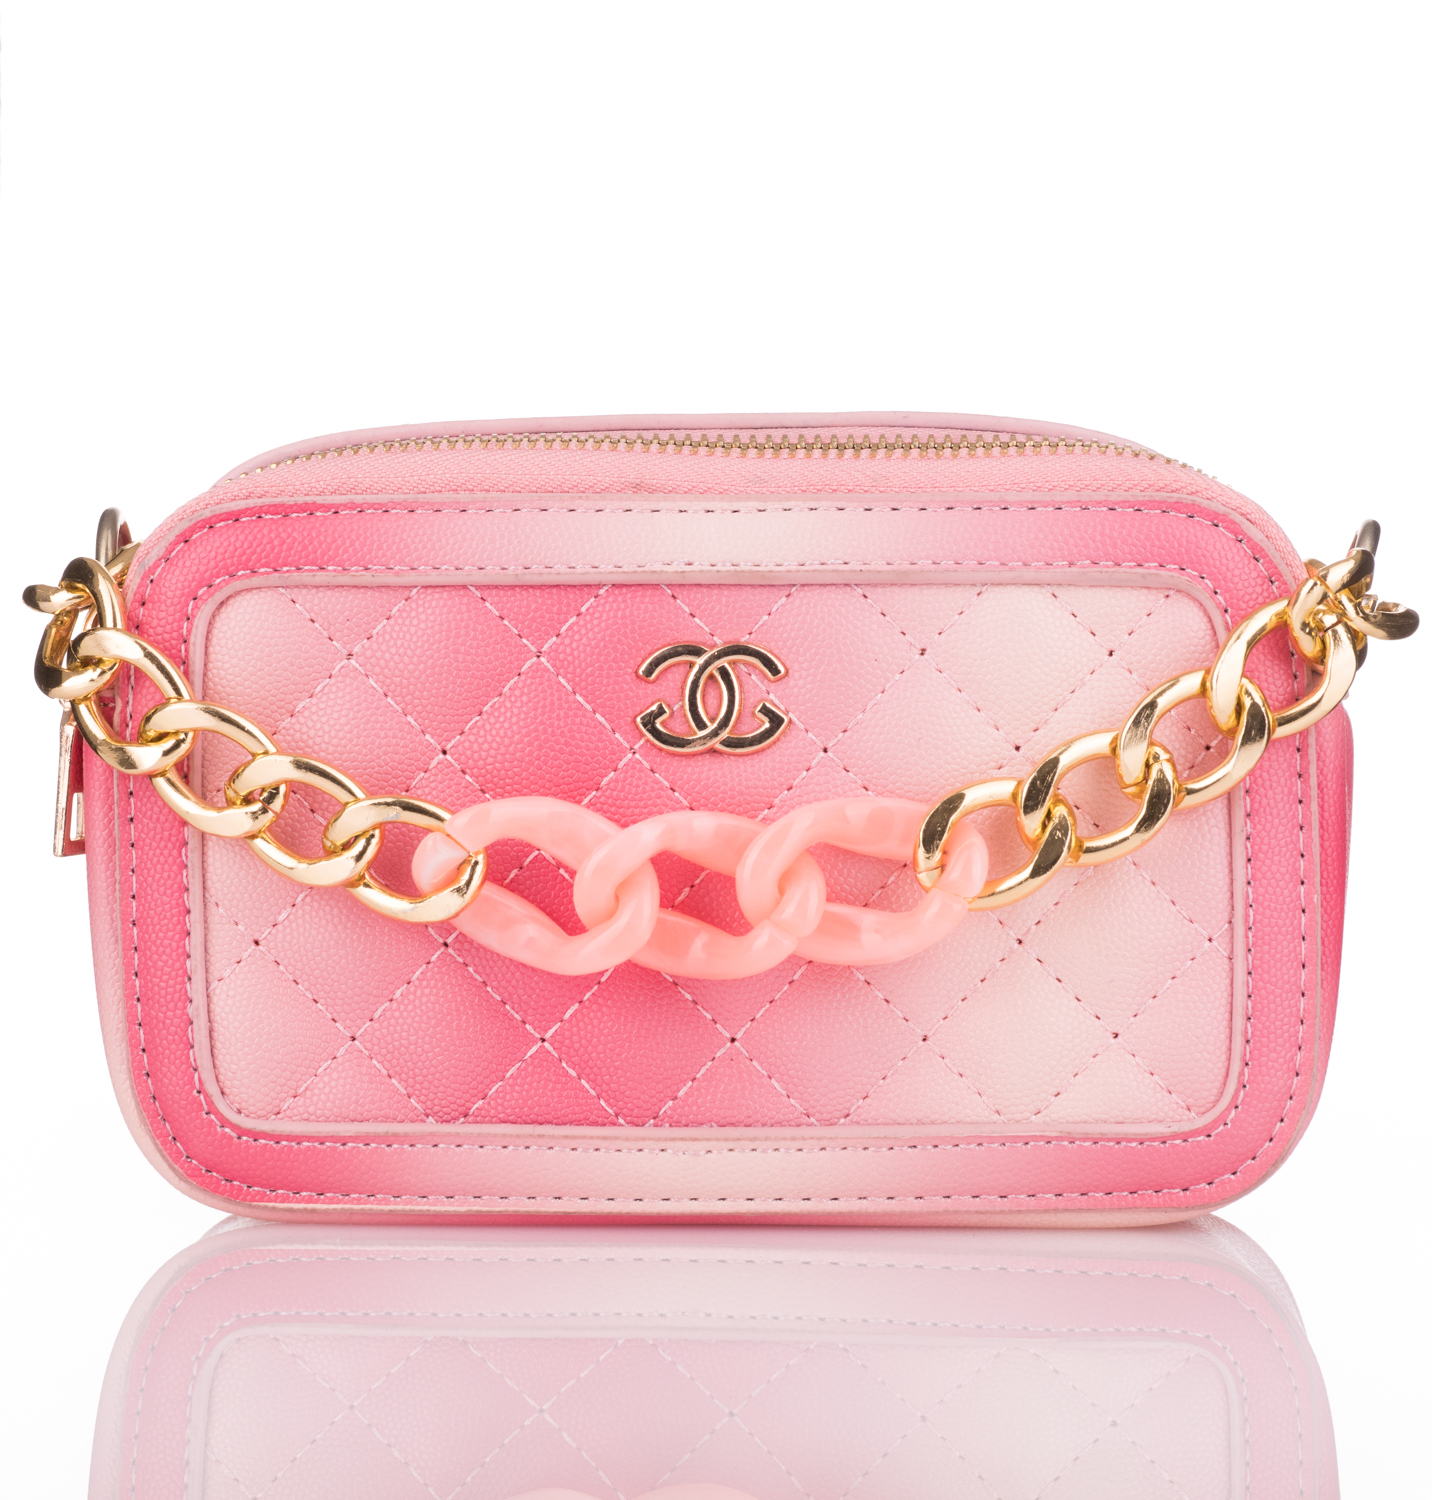 Bedachtzaam herhaling uitzondering Roze Fashion Bag met Gouden Ketting - Twins AE Cosmetics